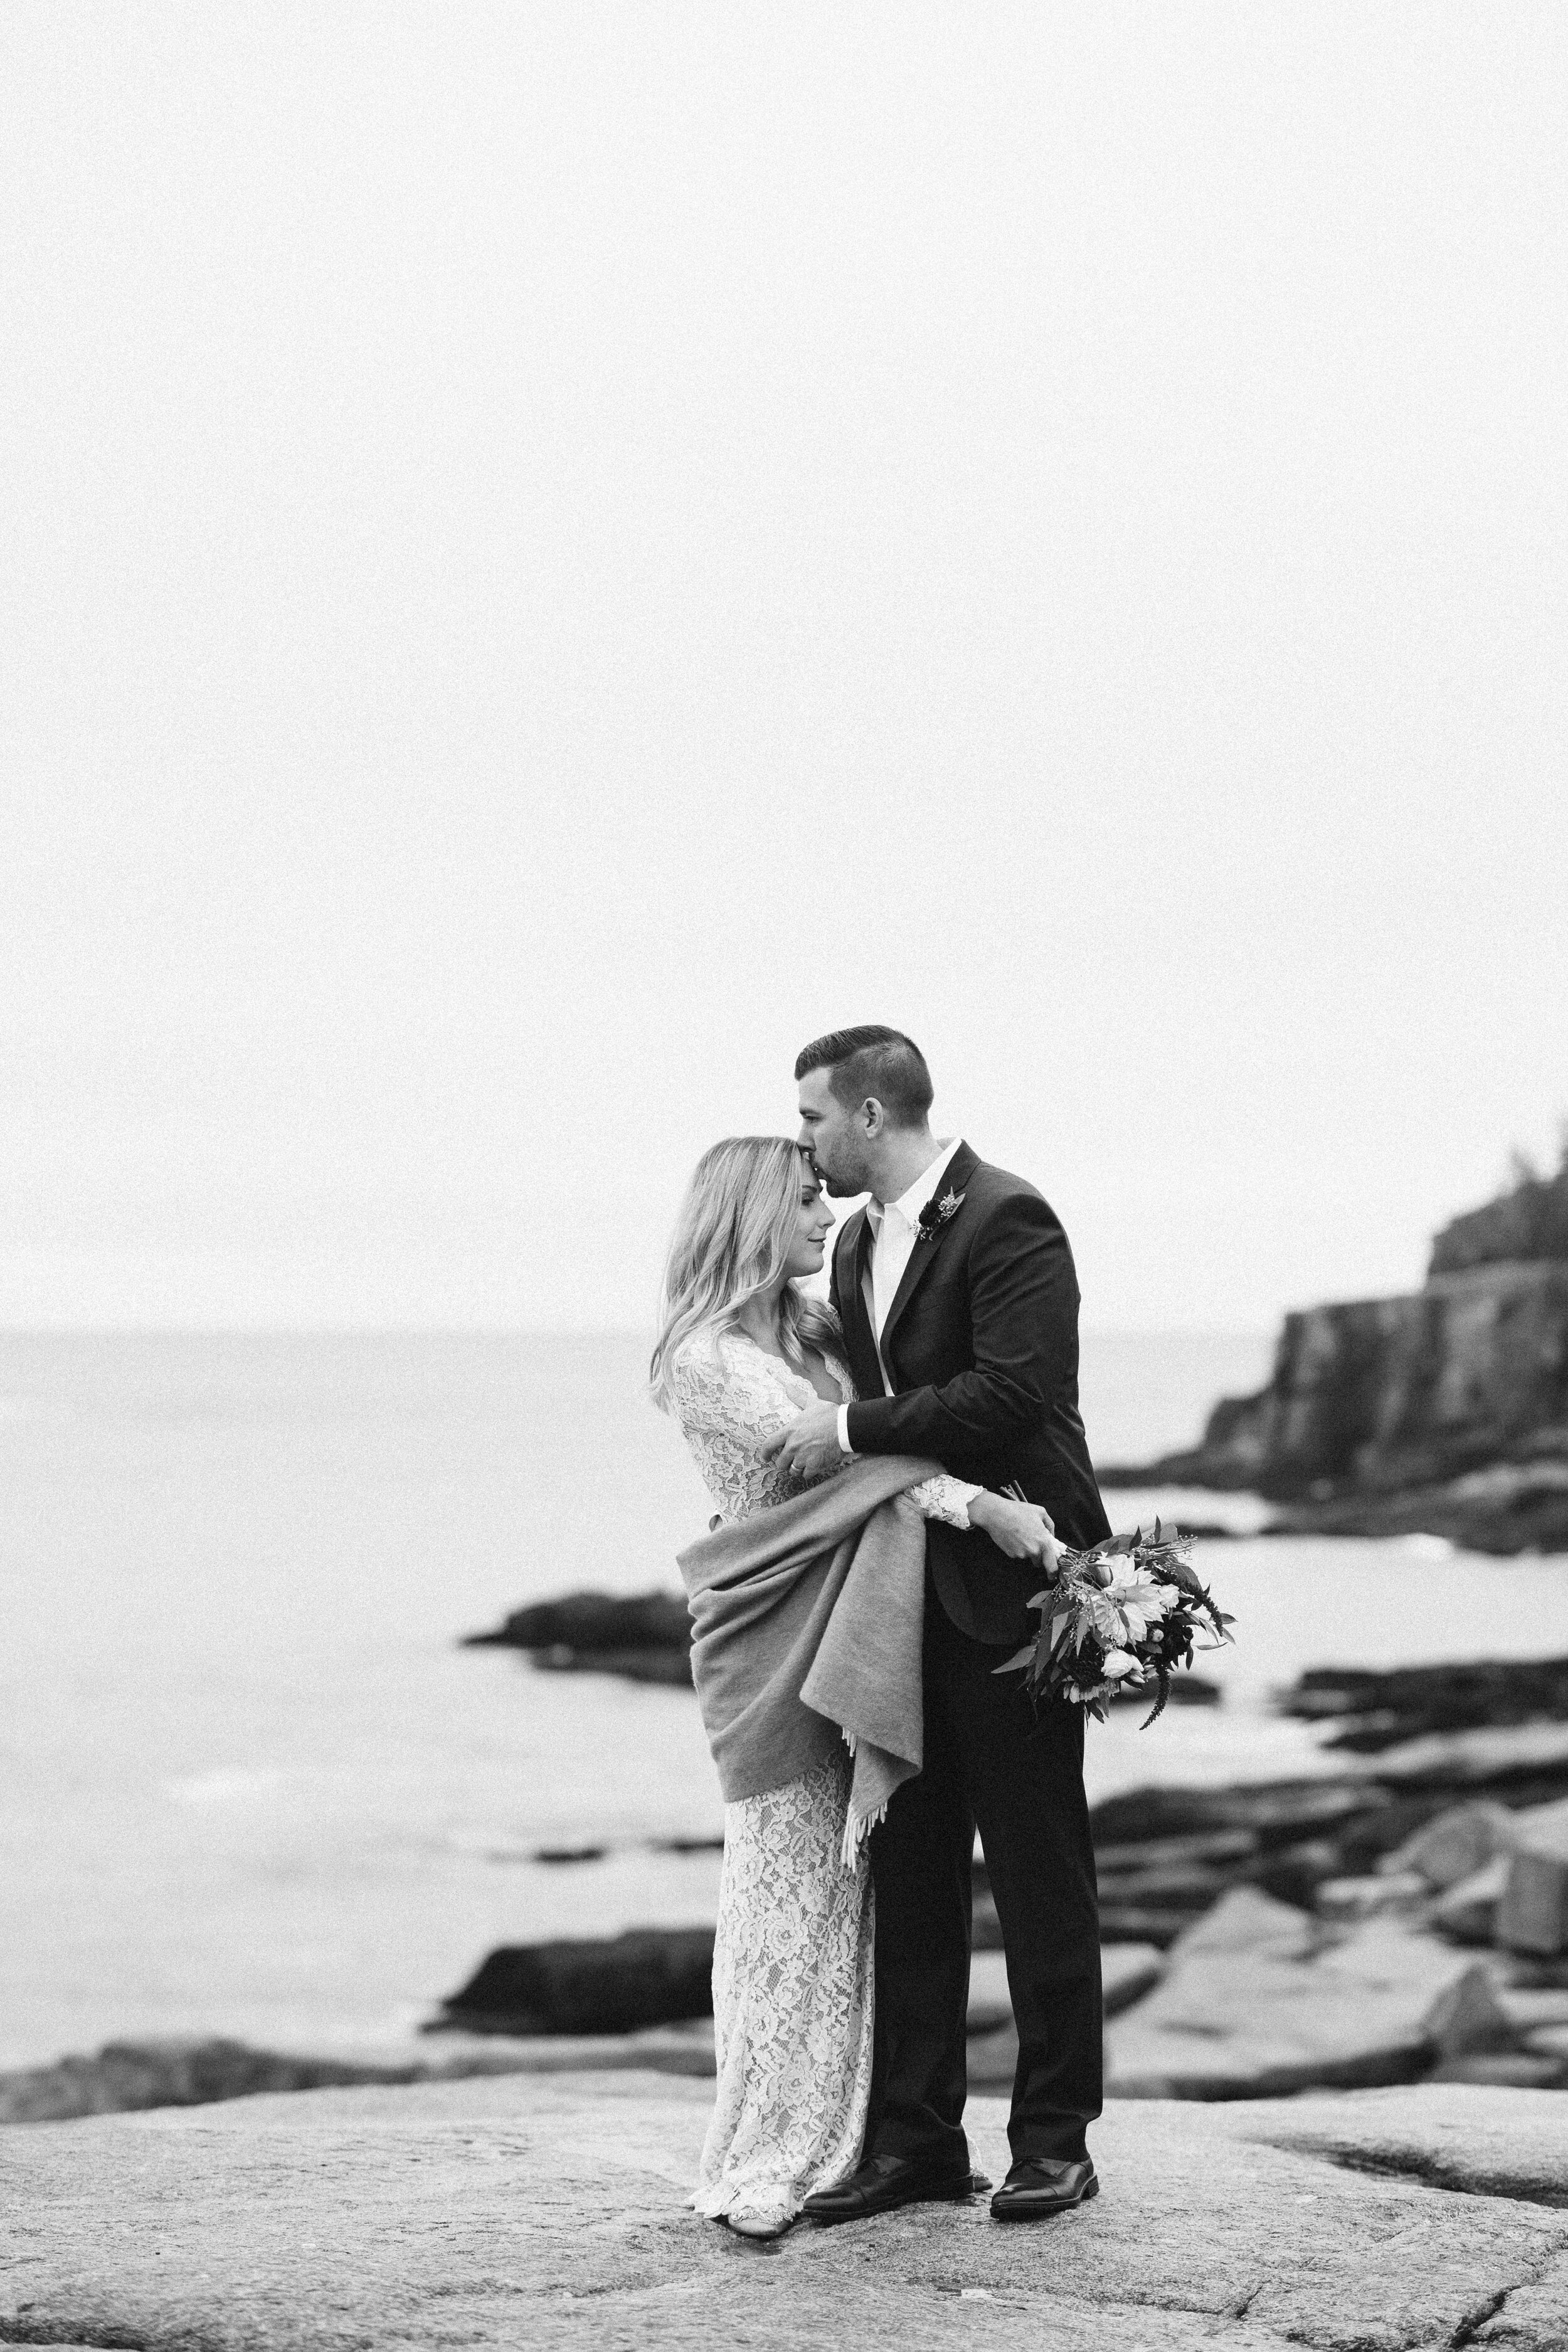 Nicole-Daacke-Photography-Acadia-national-park-elopement-photography-elopement-in-acadia-inspiration-maine-intimate-wedding-destination-elopement-photographer-rainy-day-maine-coast-bar-harbor-elopement-photography-159.jpg